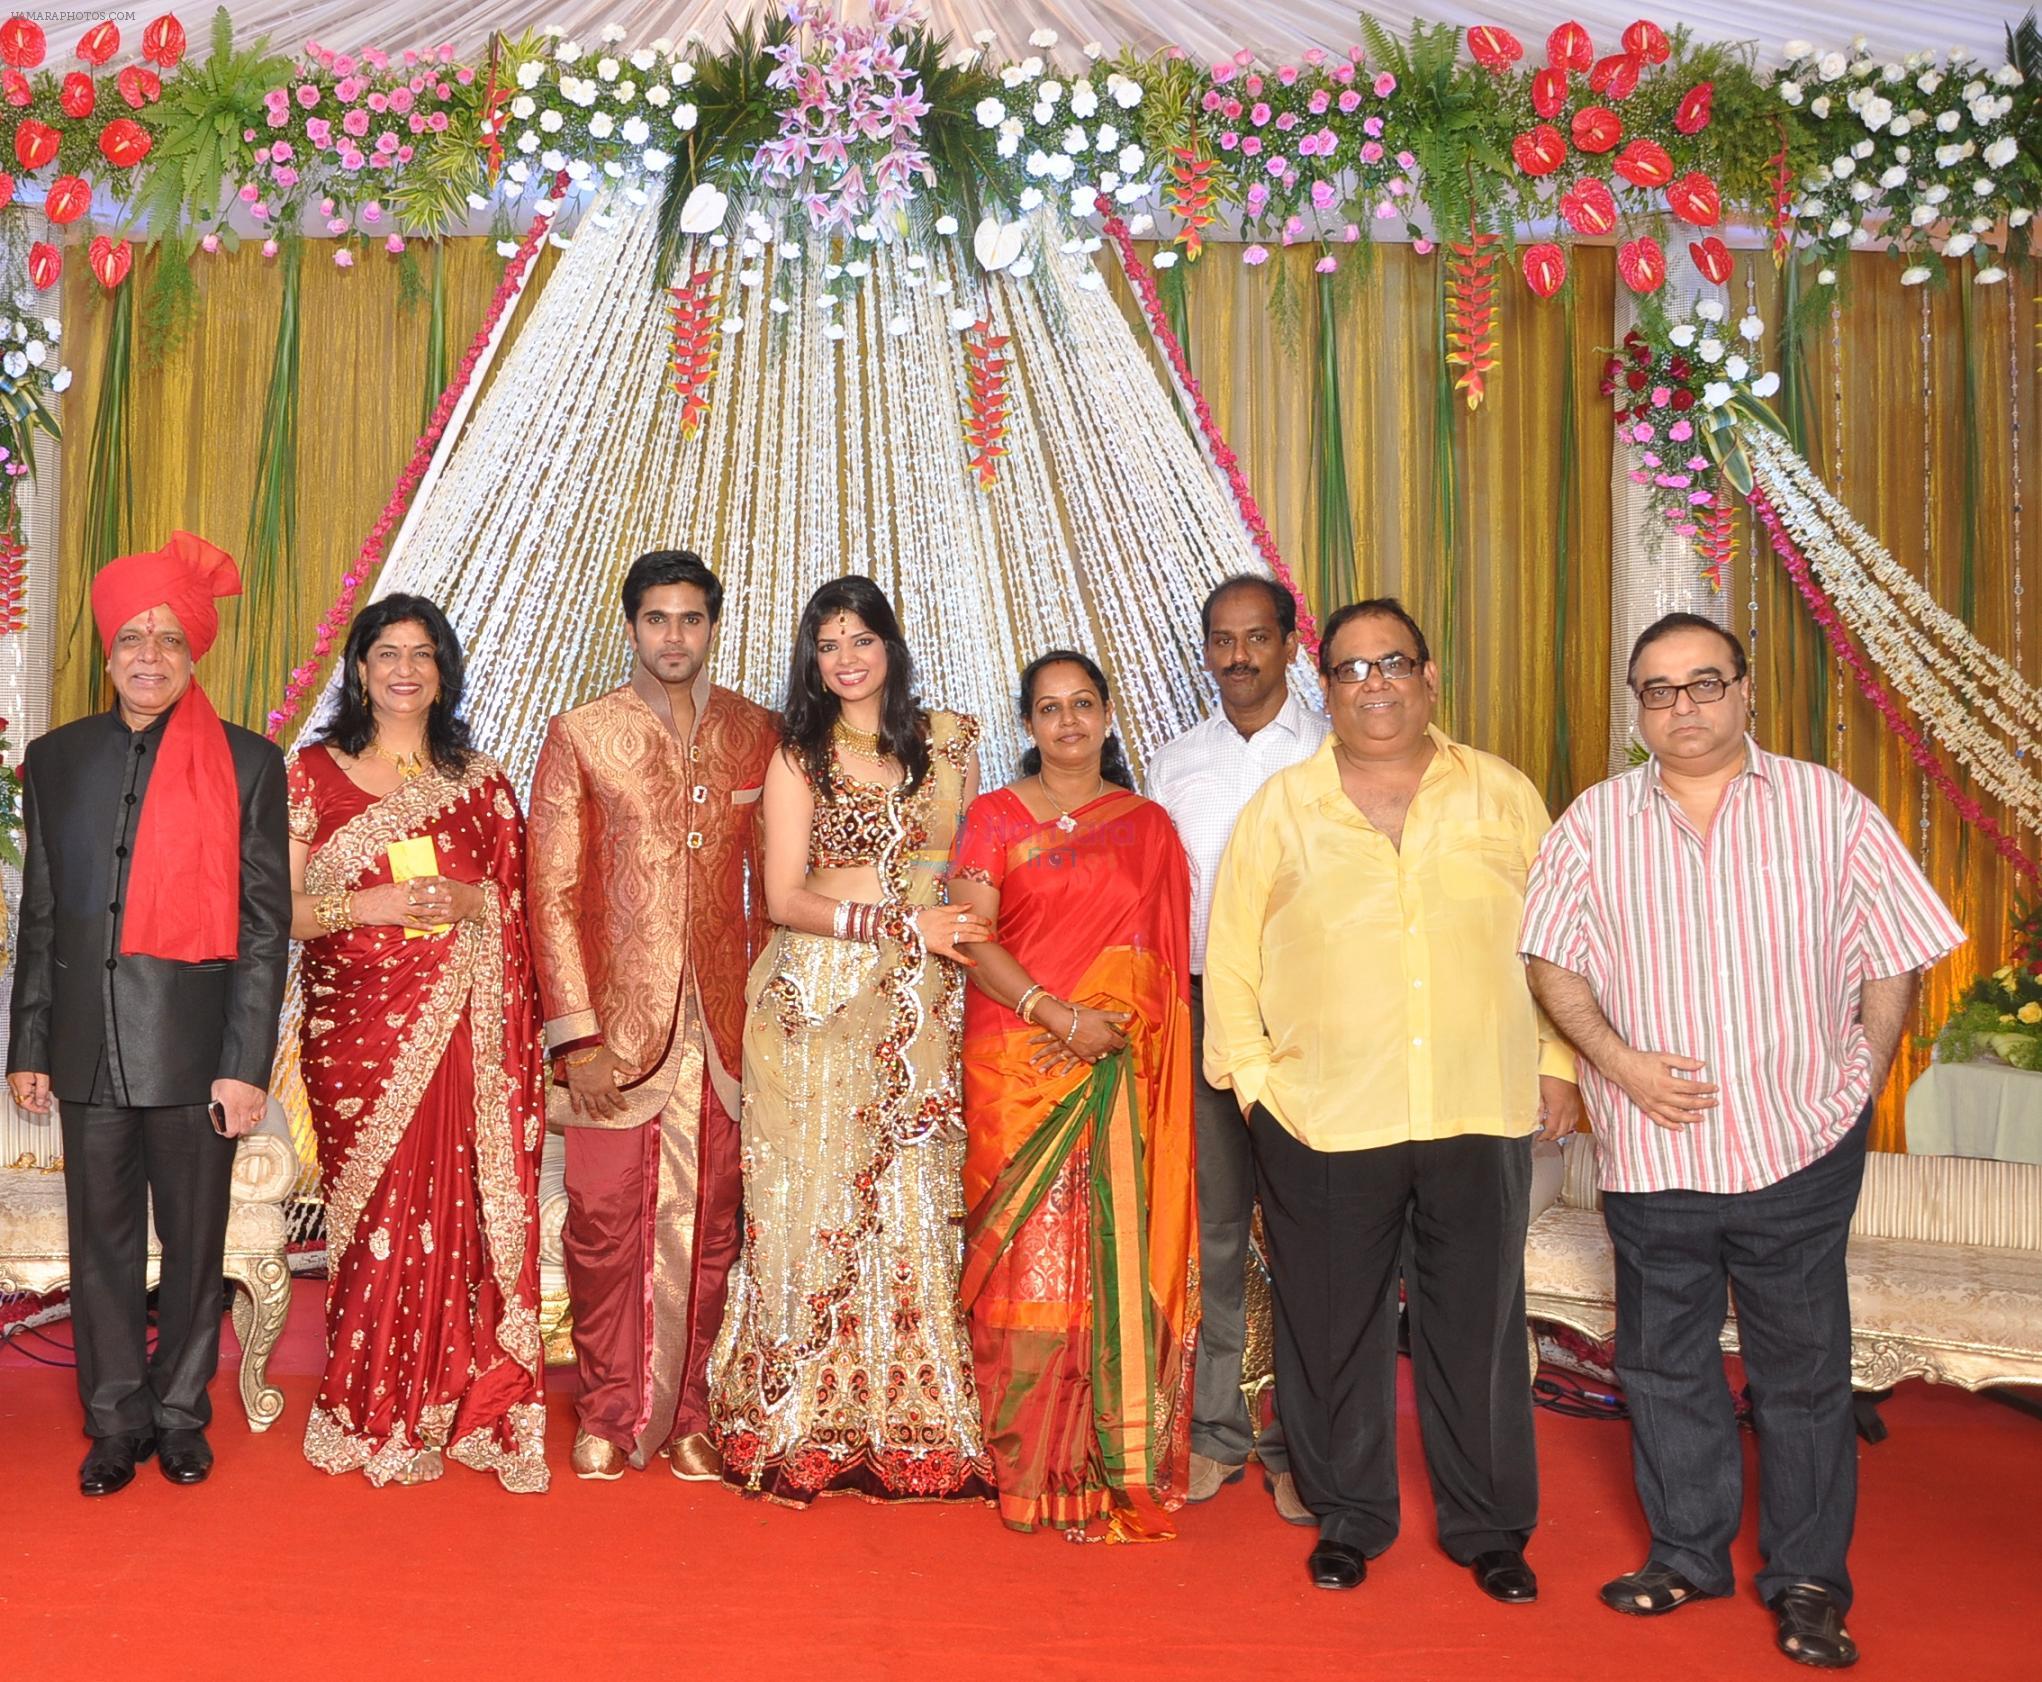 Govind namdev, wife, Vibin das, Pallavi Namdev Satish kaushik & RajKumar santoshi at wedding of Pallavi Govind Namdev with Vibin Das on 25th May 2012